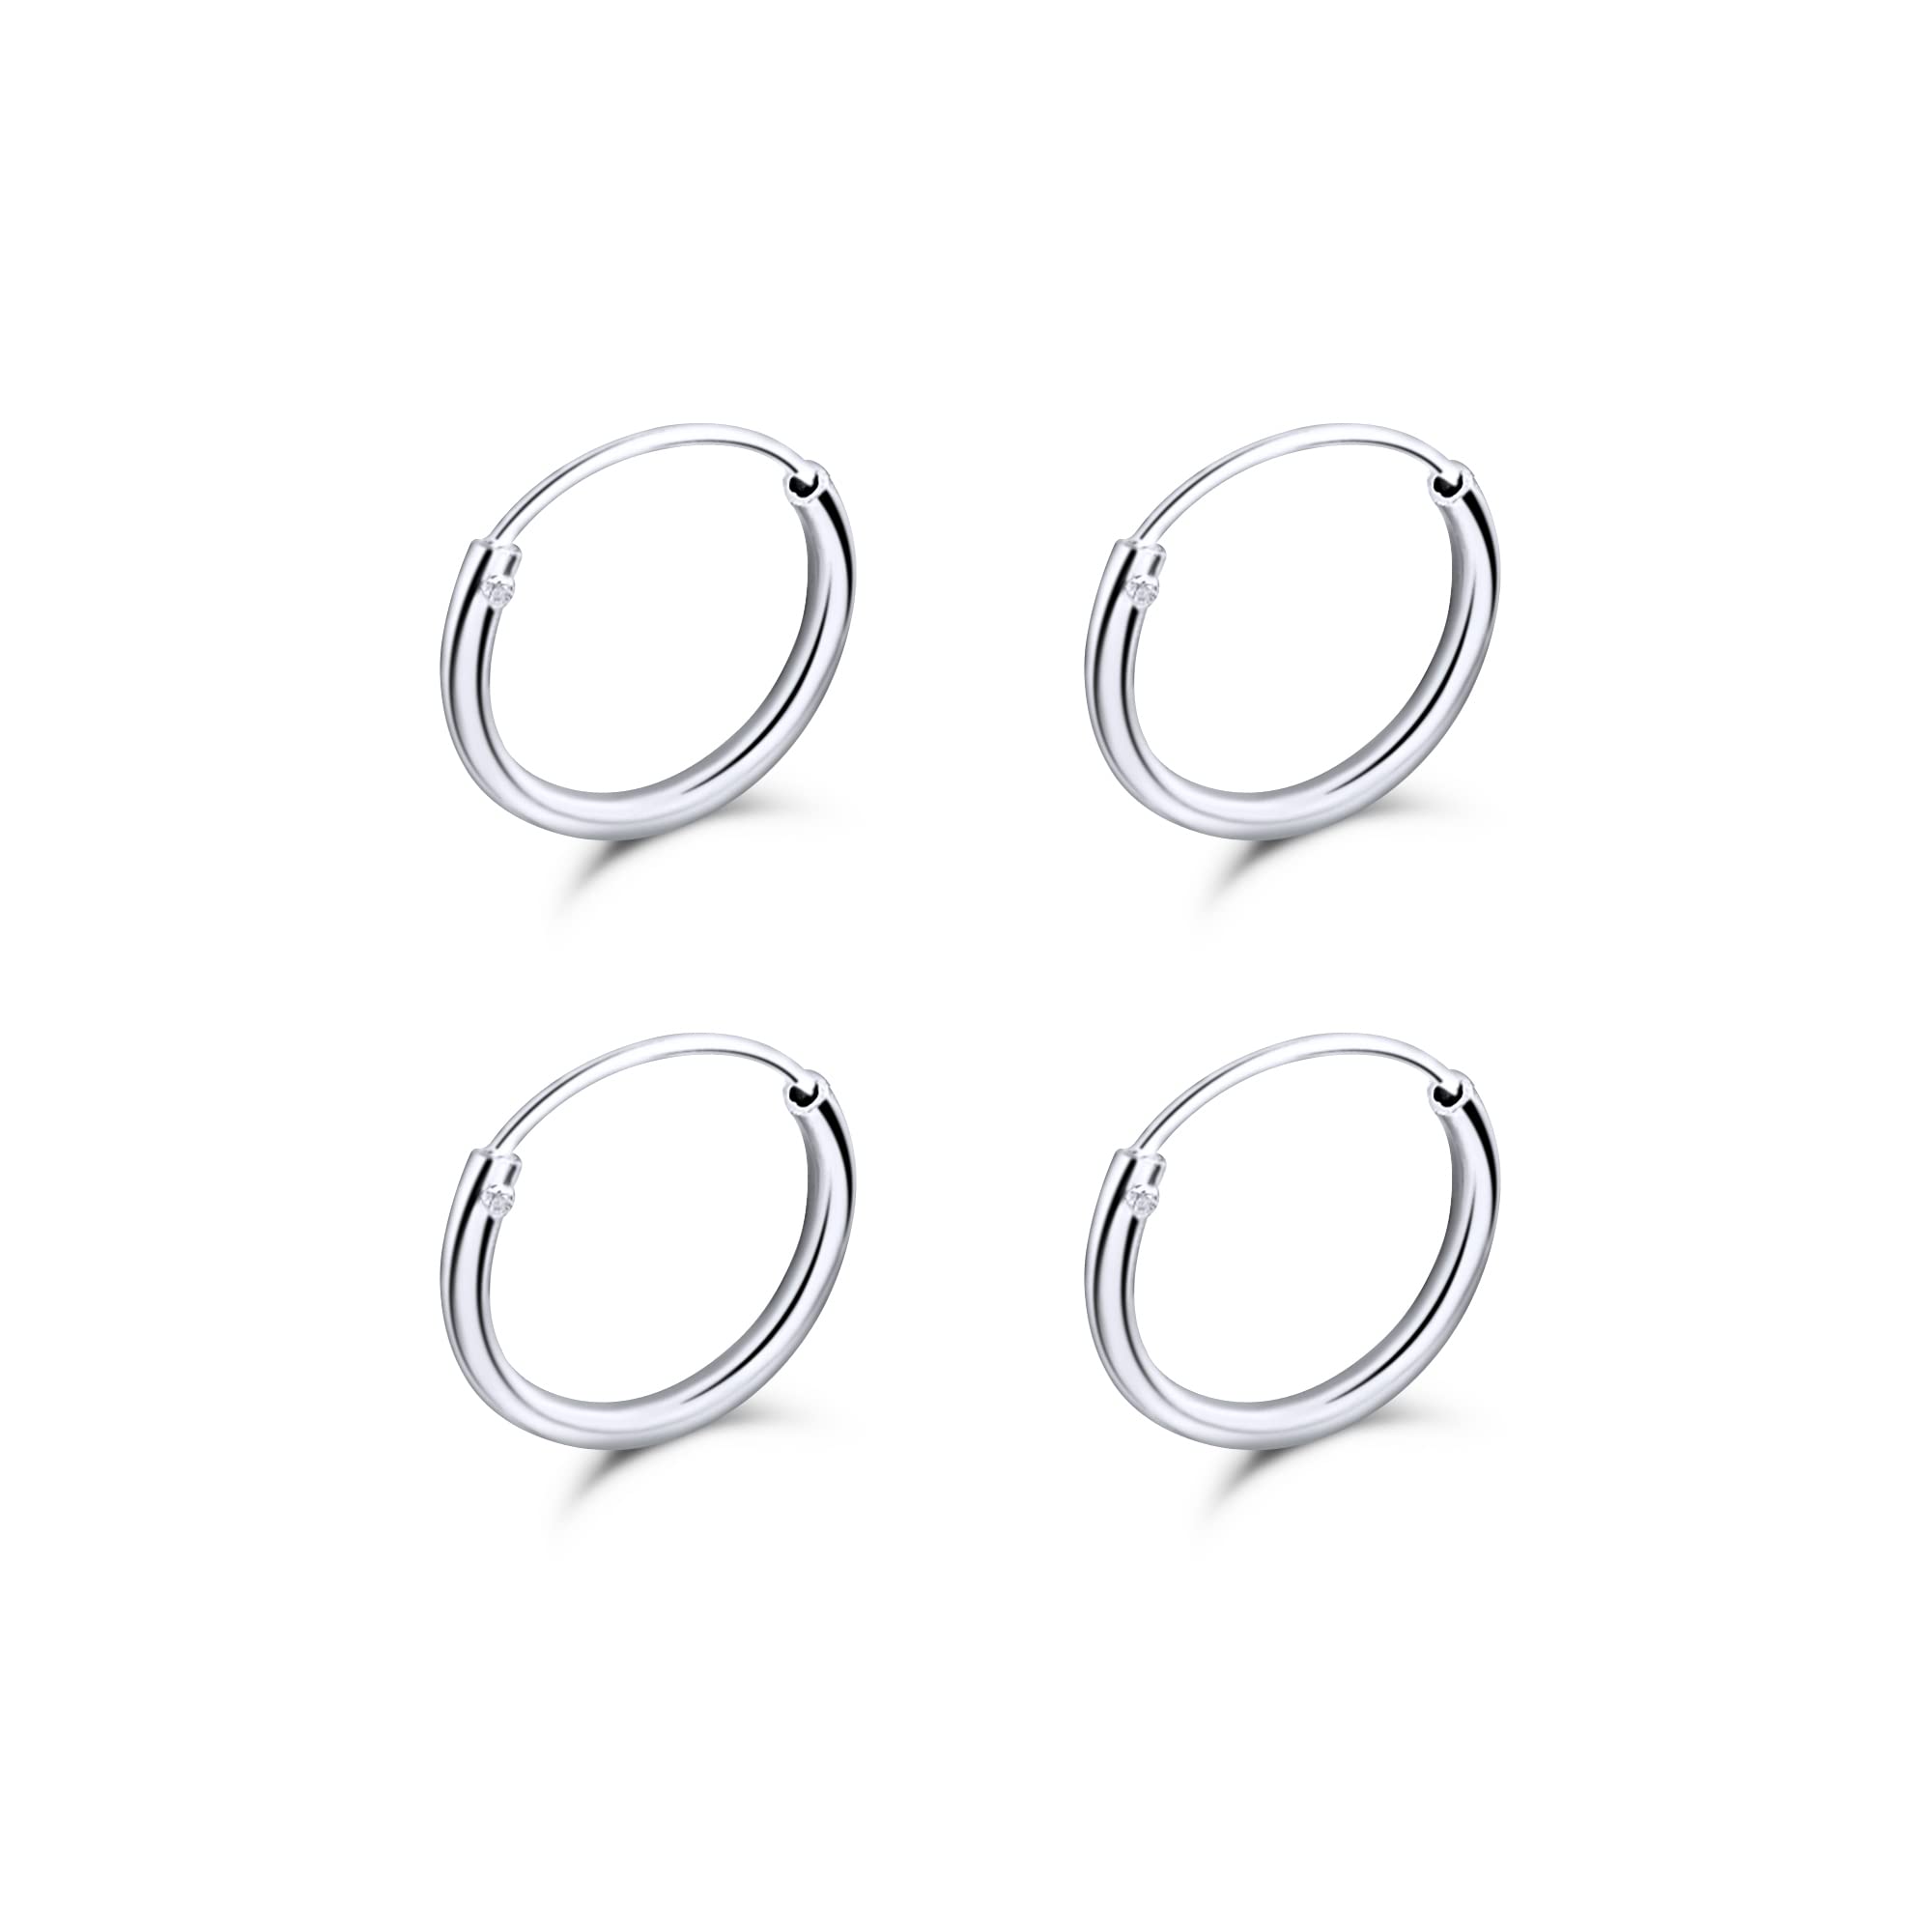 Silver Hoop Earrings - Cartilage Earring for Women Girls Men Boys - Sterling Silver Hoops - Gold Hoops - Rose Gold Hoops -10mm Tiny Small Endless Hoop Earrings, Set of 2-5 Pairs